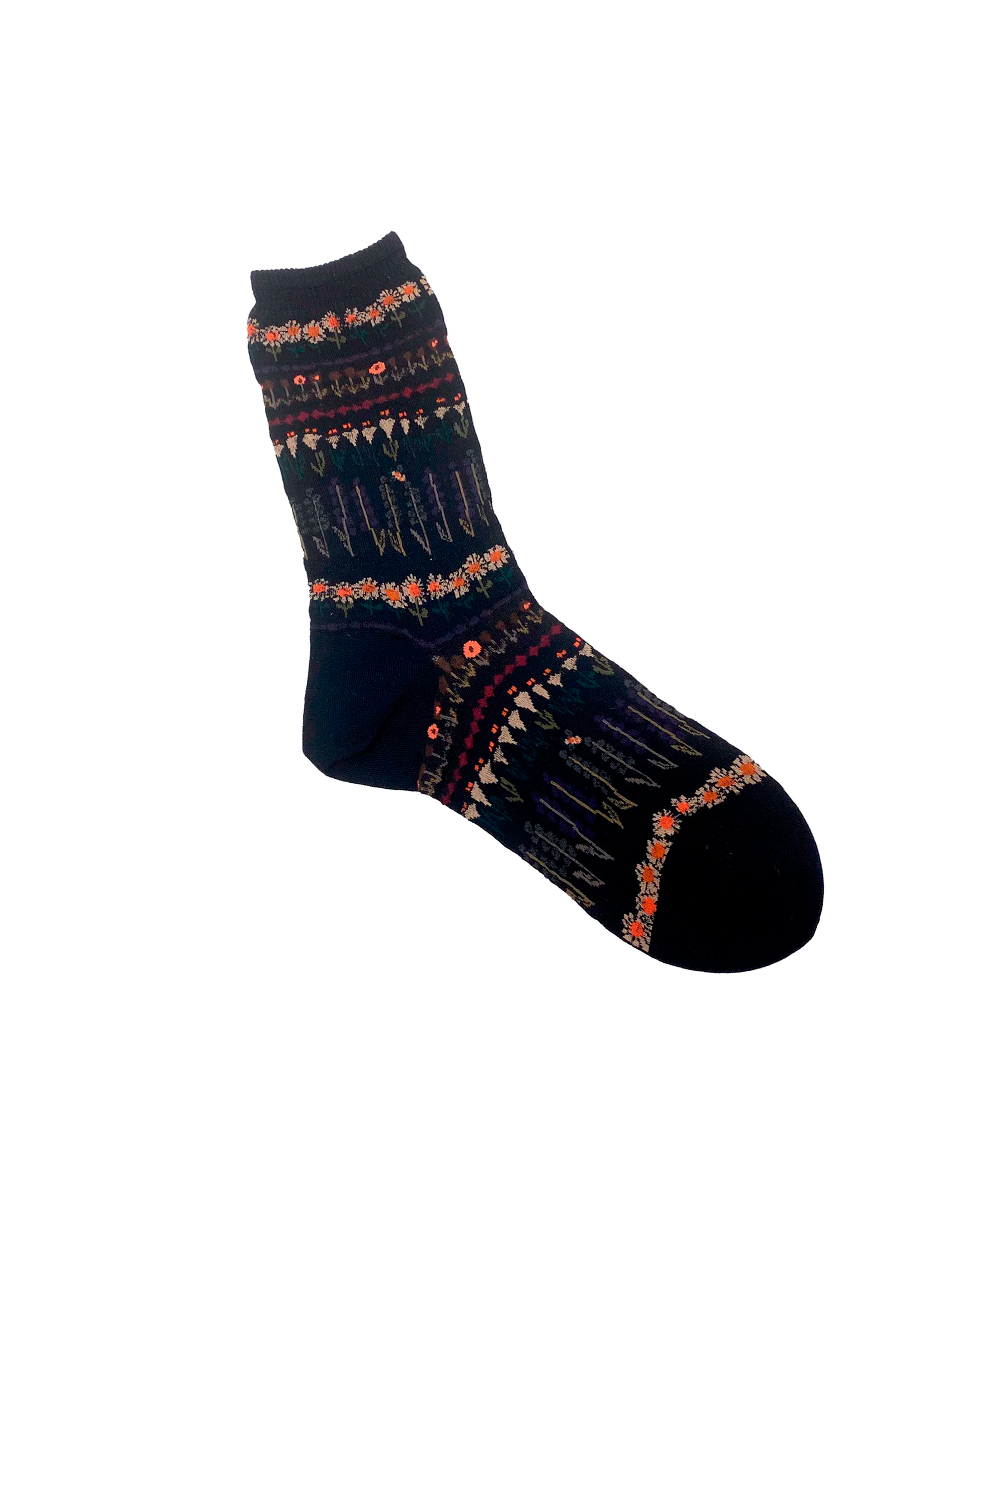 AM-763 Socks, Black